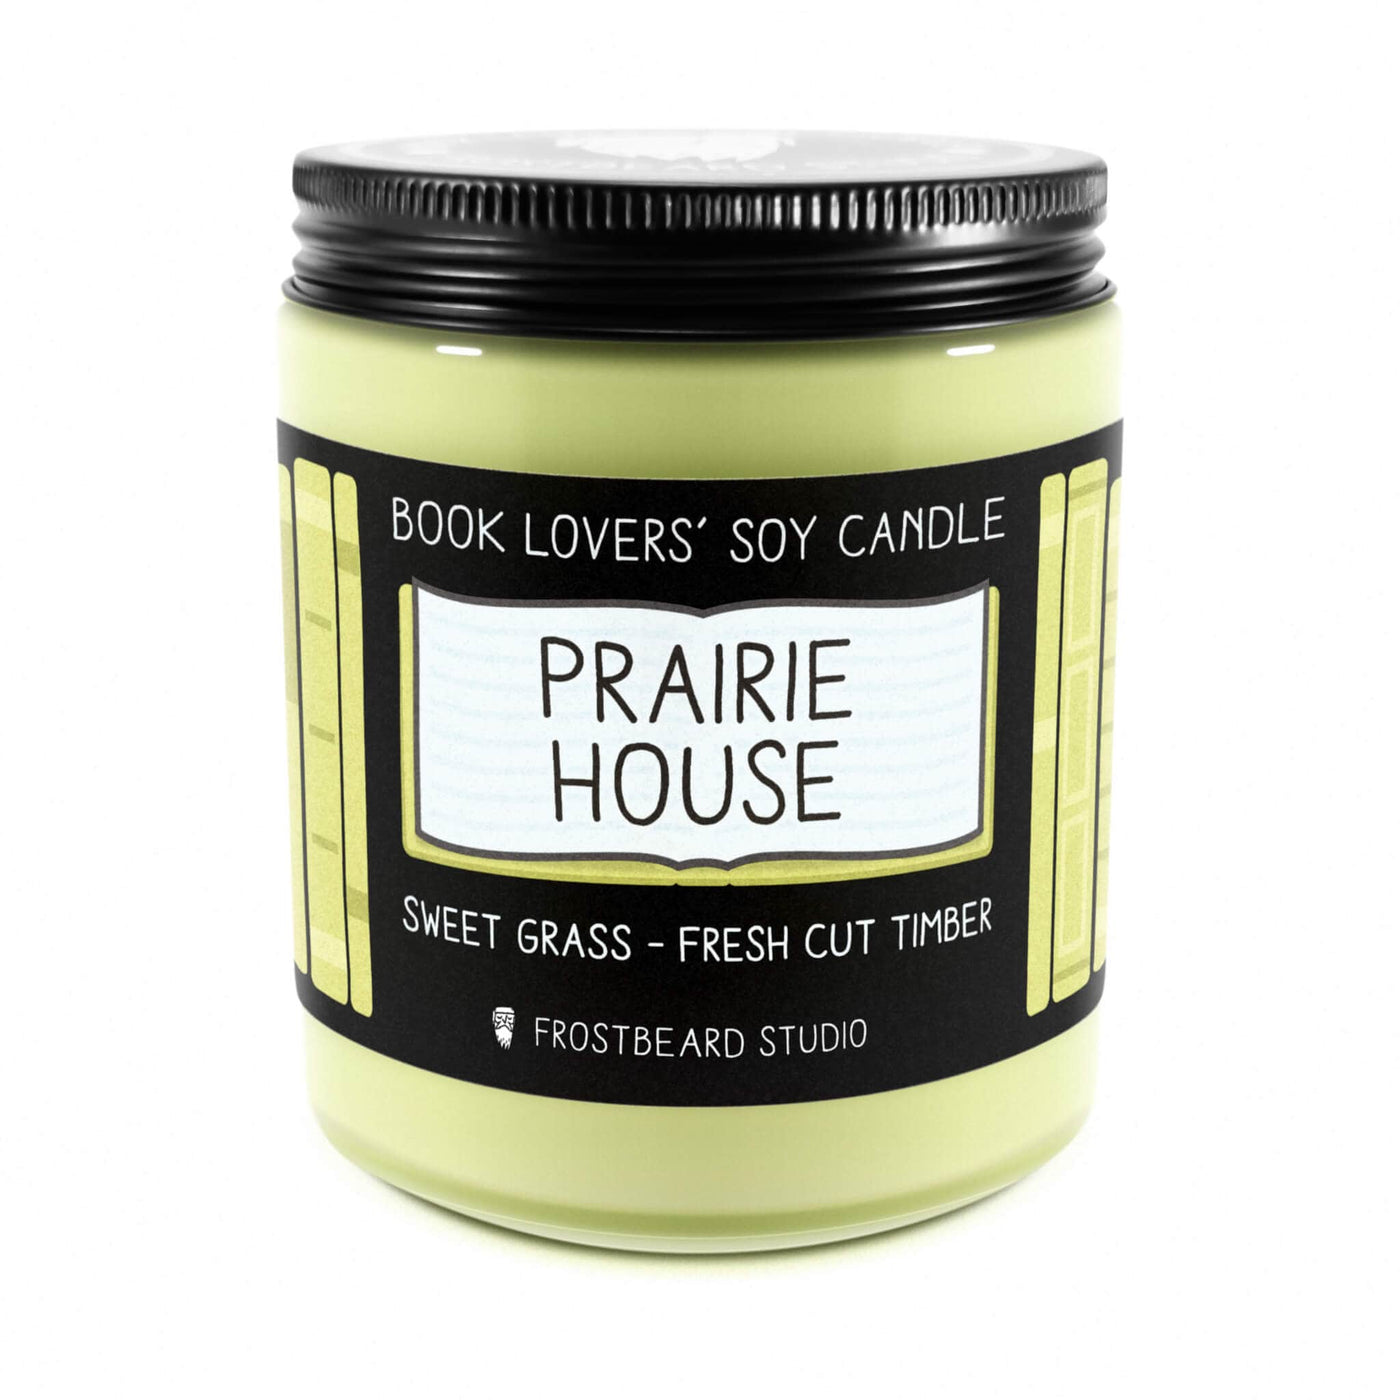 Prairie House  -  8 oz Jar  -  Book Lovers' Soy Candle  -  Frostbeard Studio